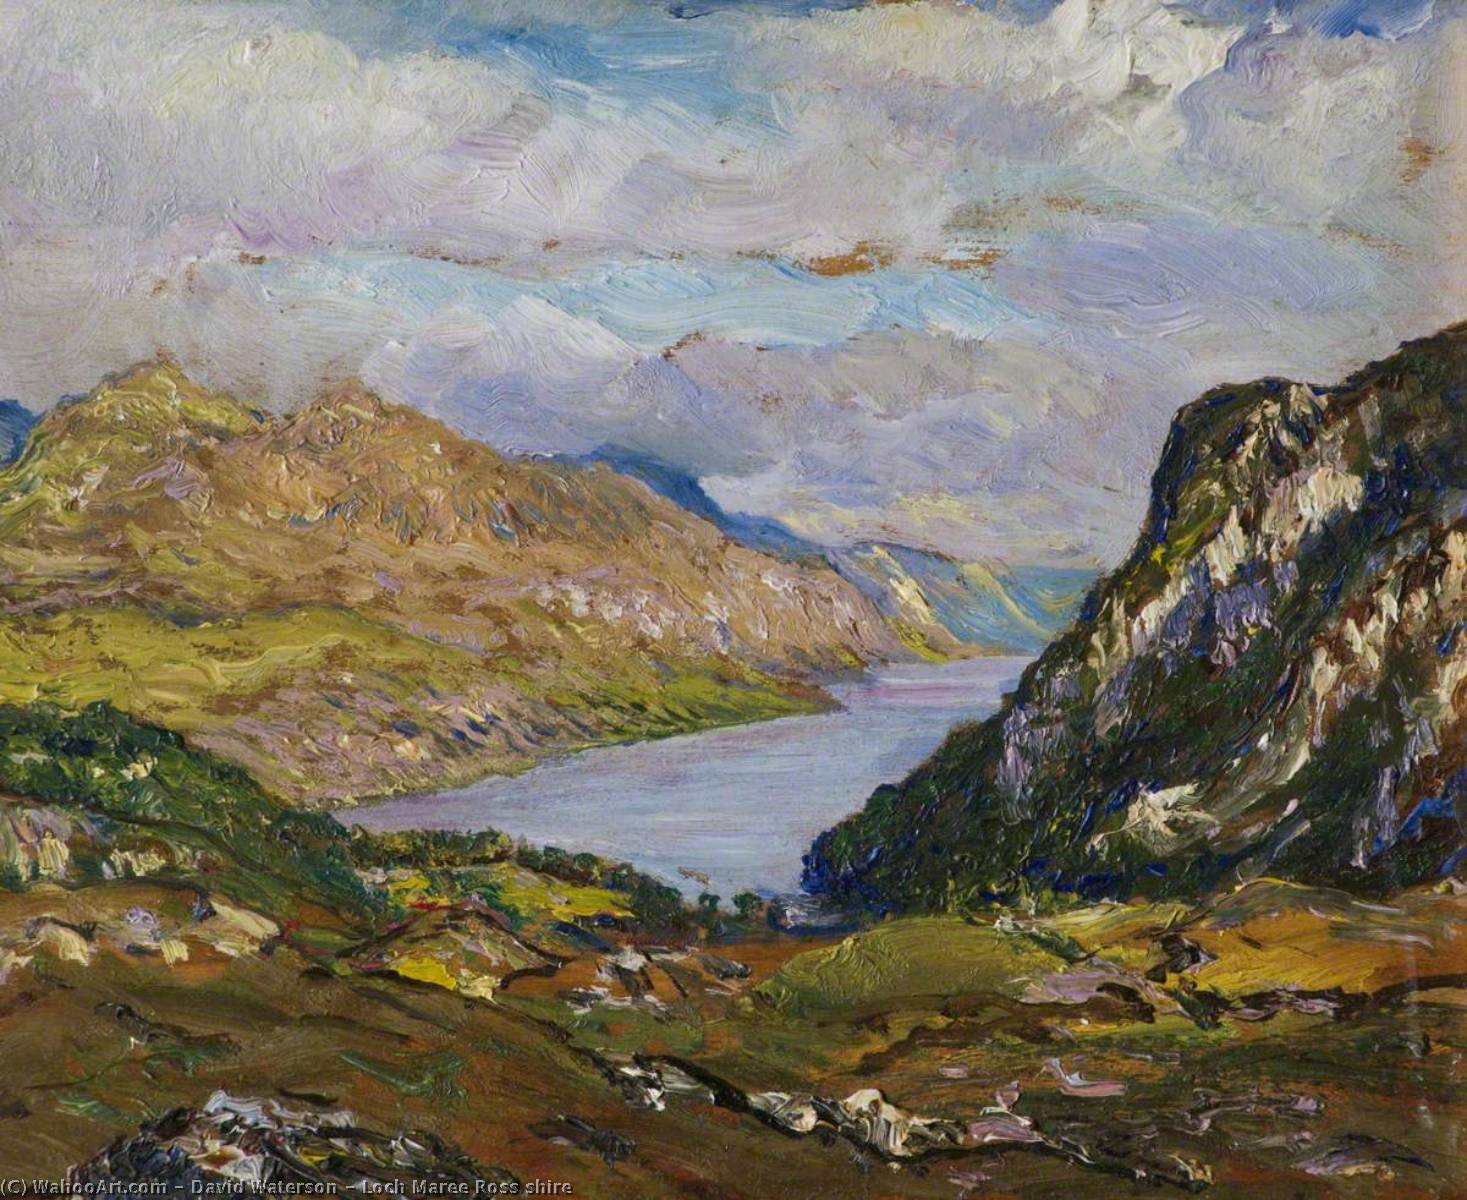 Loch Maree Ross shire, 1920 by David Waterson David Waterson | ArtsDot.com